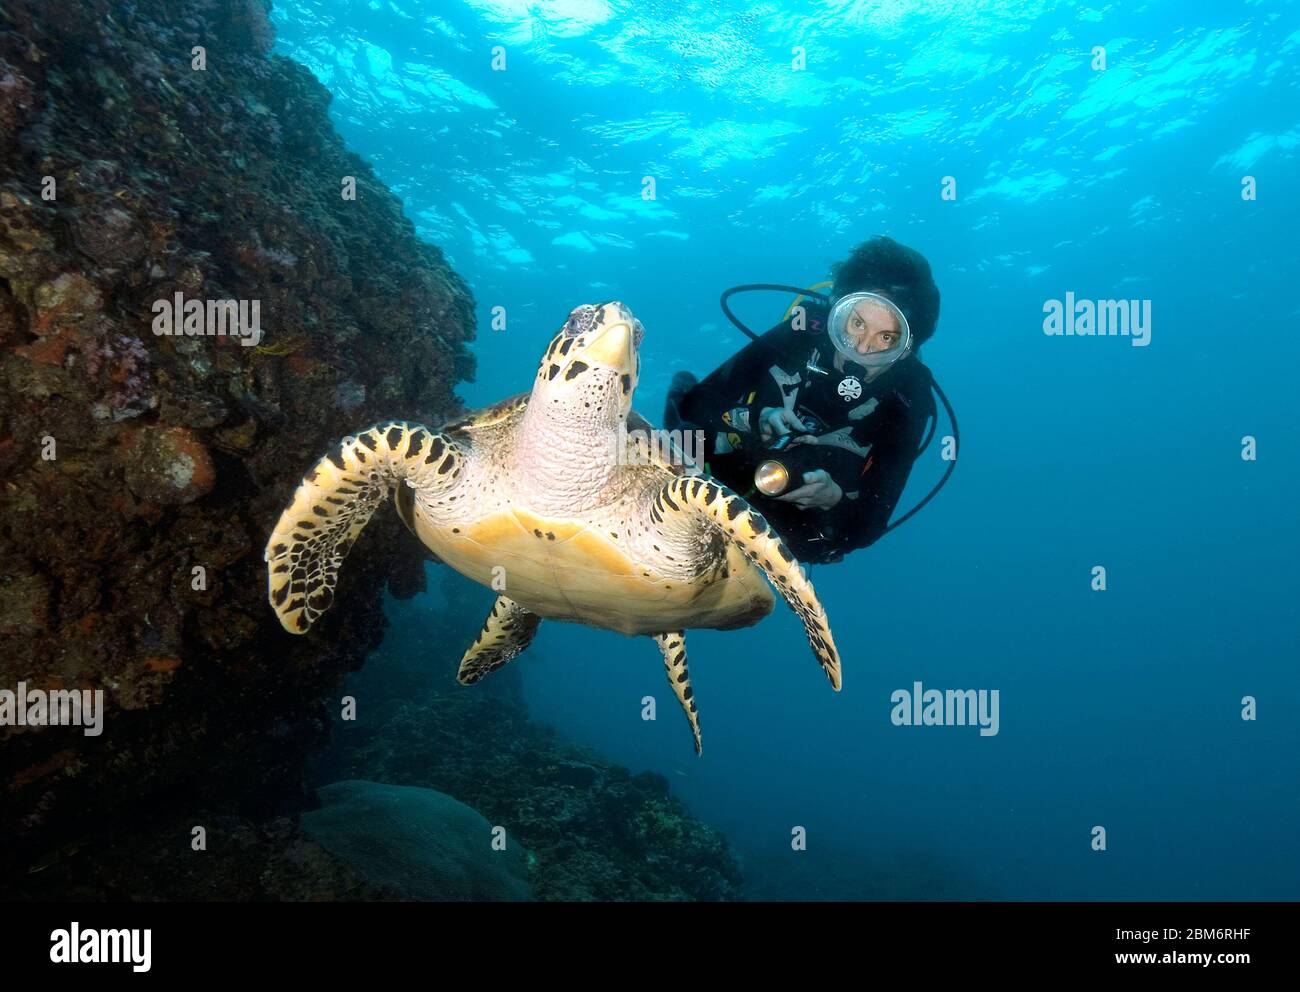 Taucherin schwimmt neben Echte Karettschildkröte (Eretmochelys imbricata), Indopazifik, Thailand, Asien Stock Photo